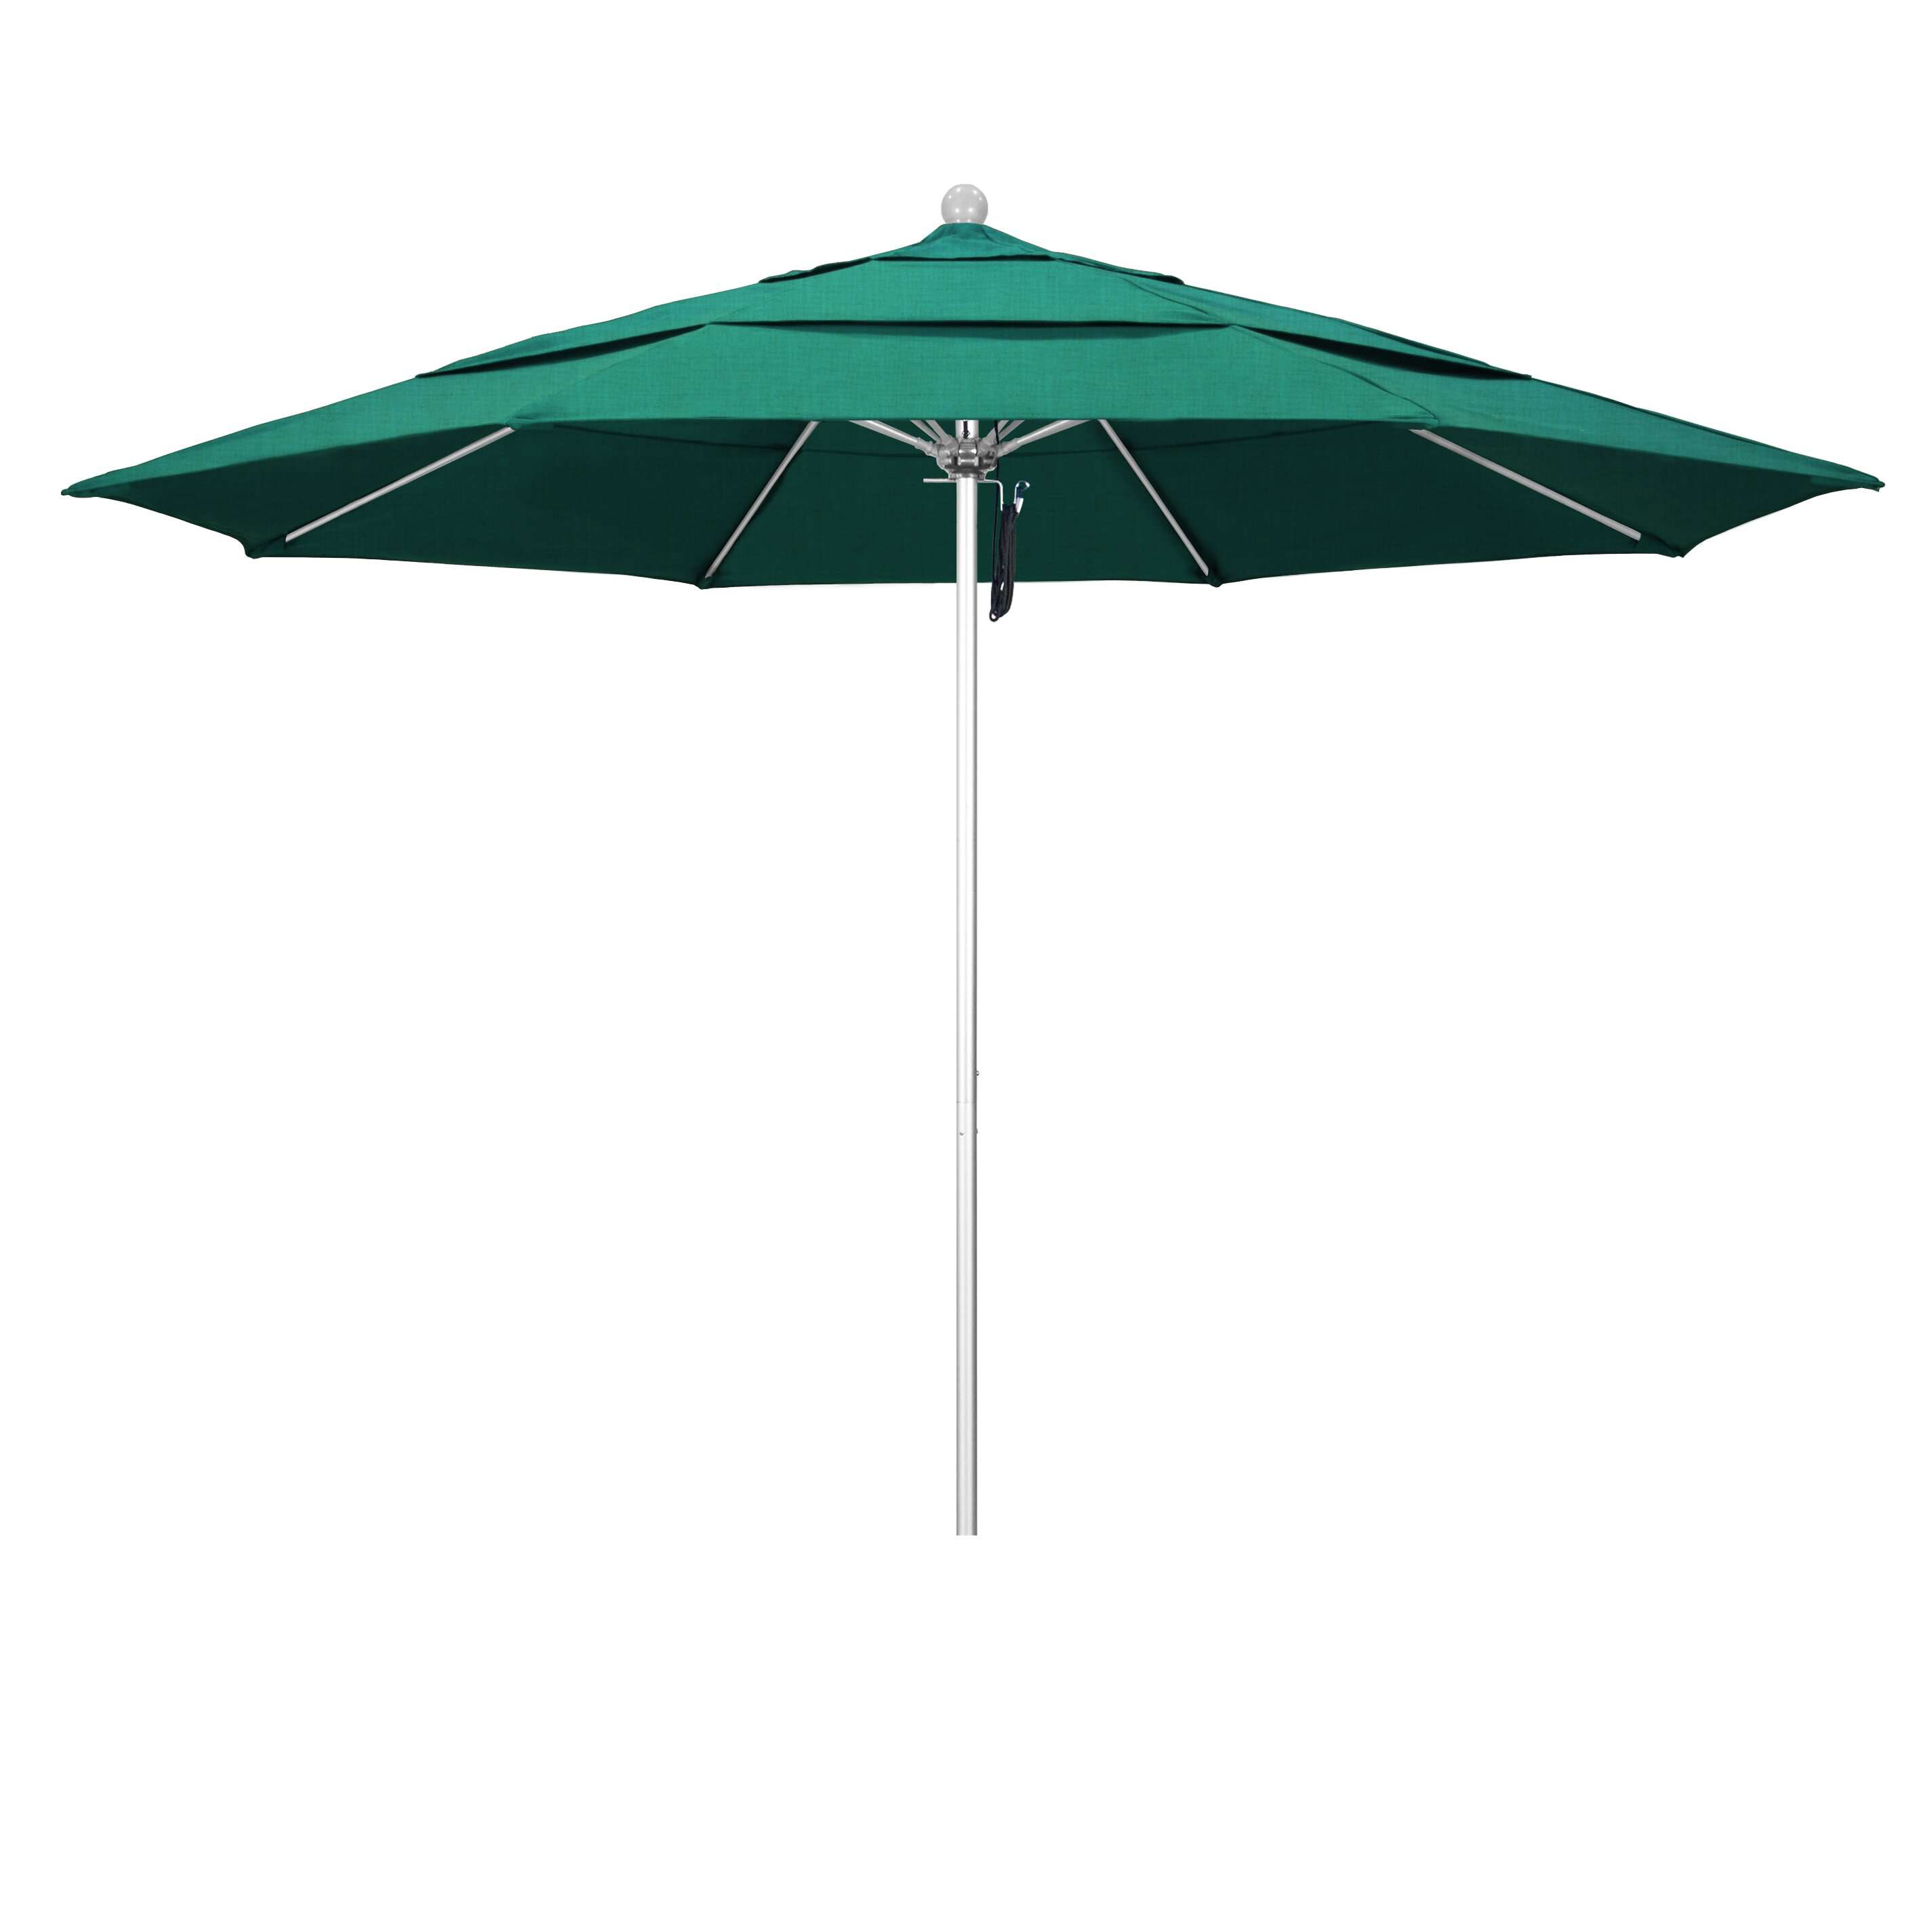 Sol 72 Outdoor Caravelle 11' Market Sunbrella Umbrella